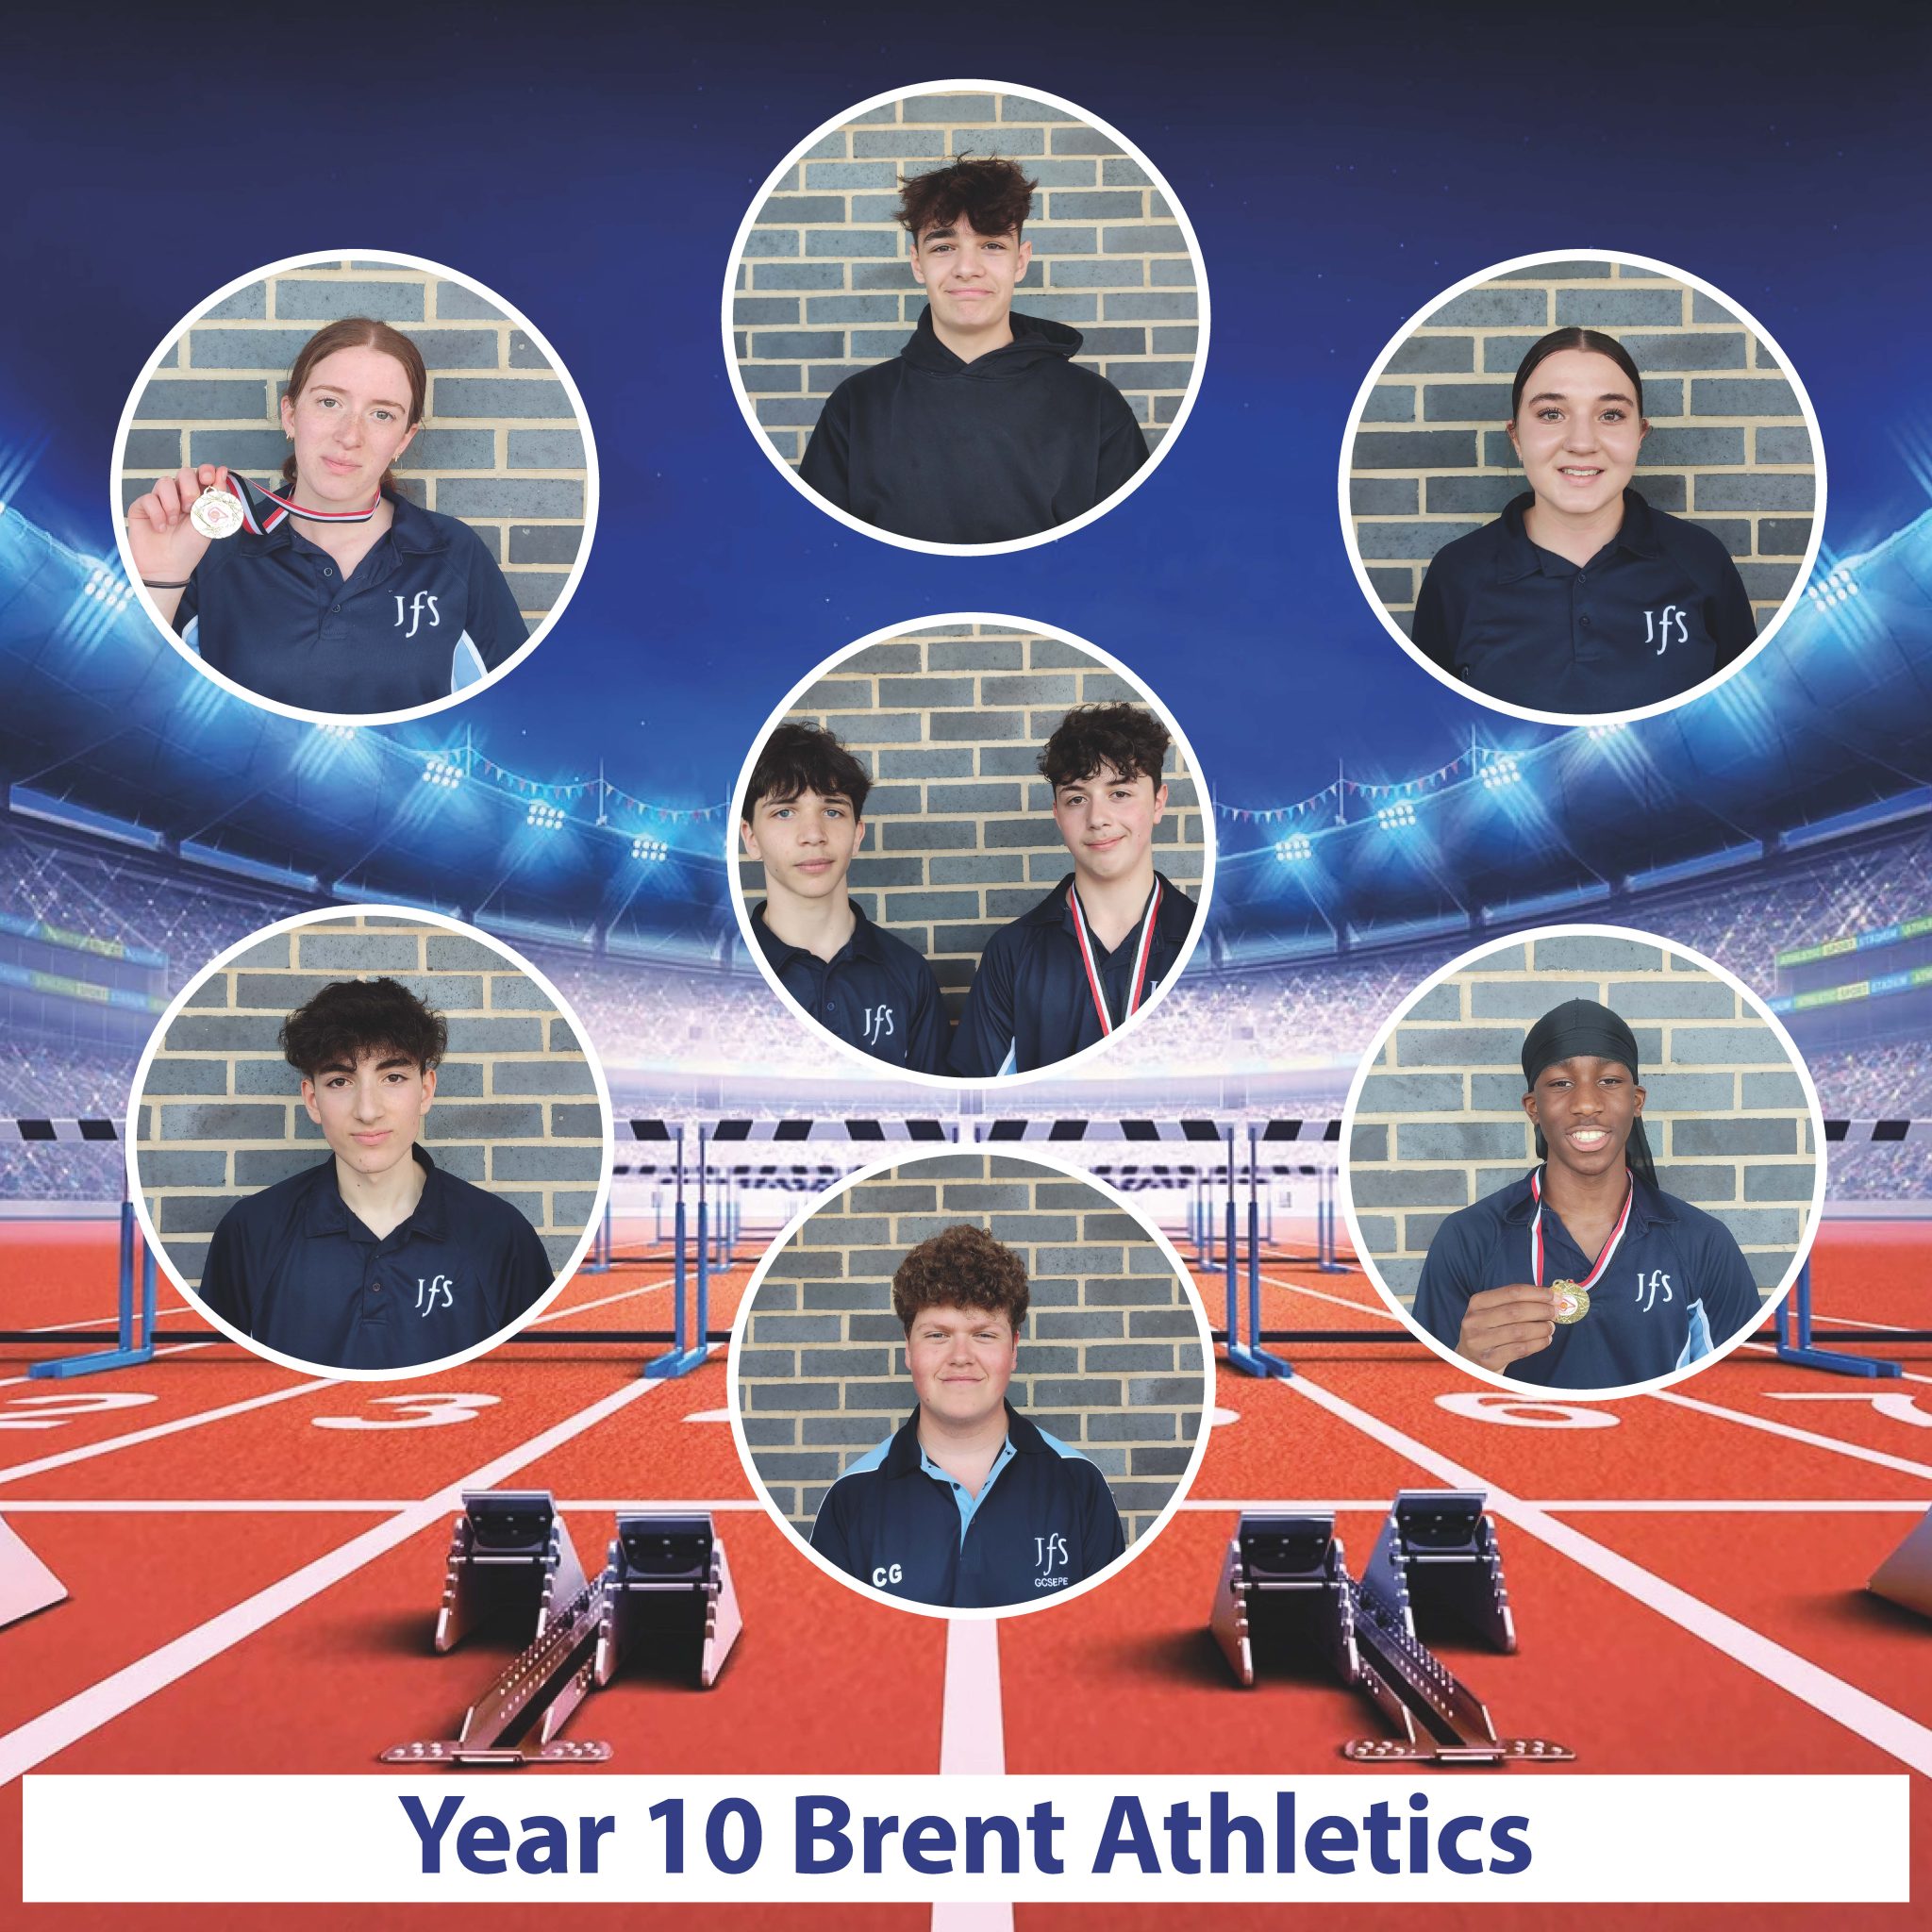 Year 10 Brent Athletics